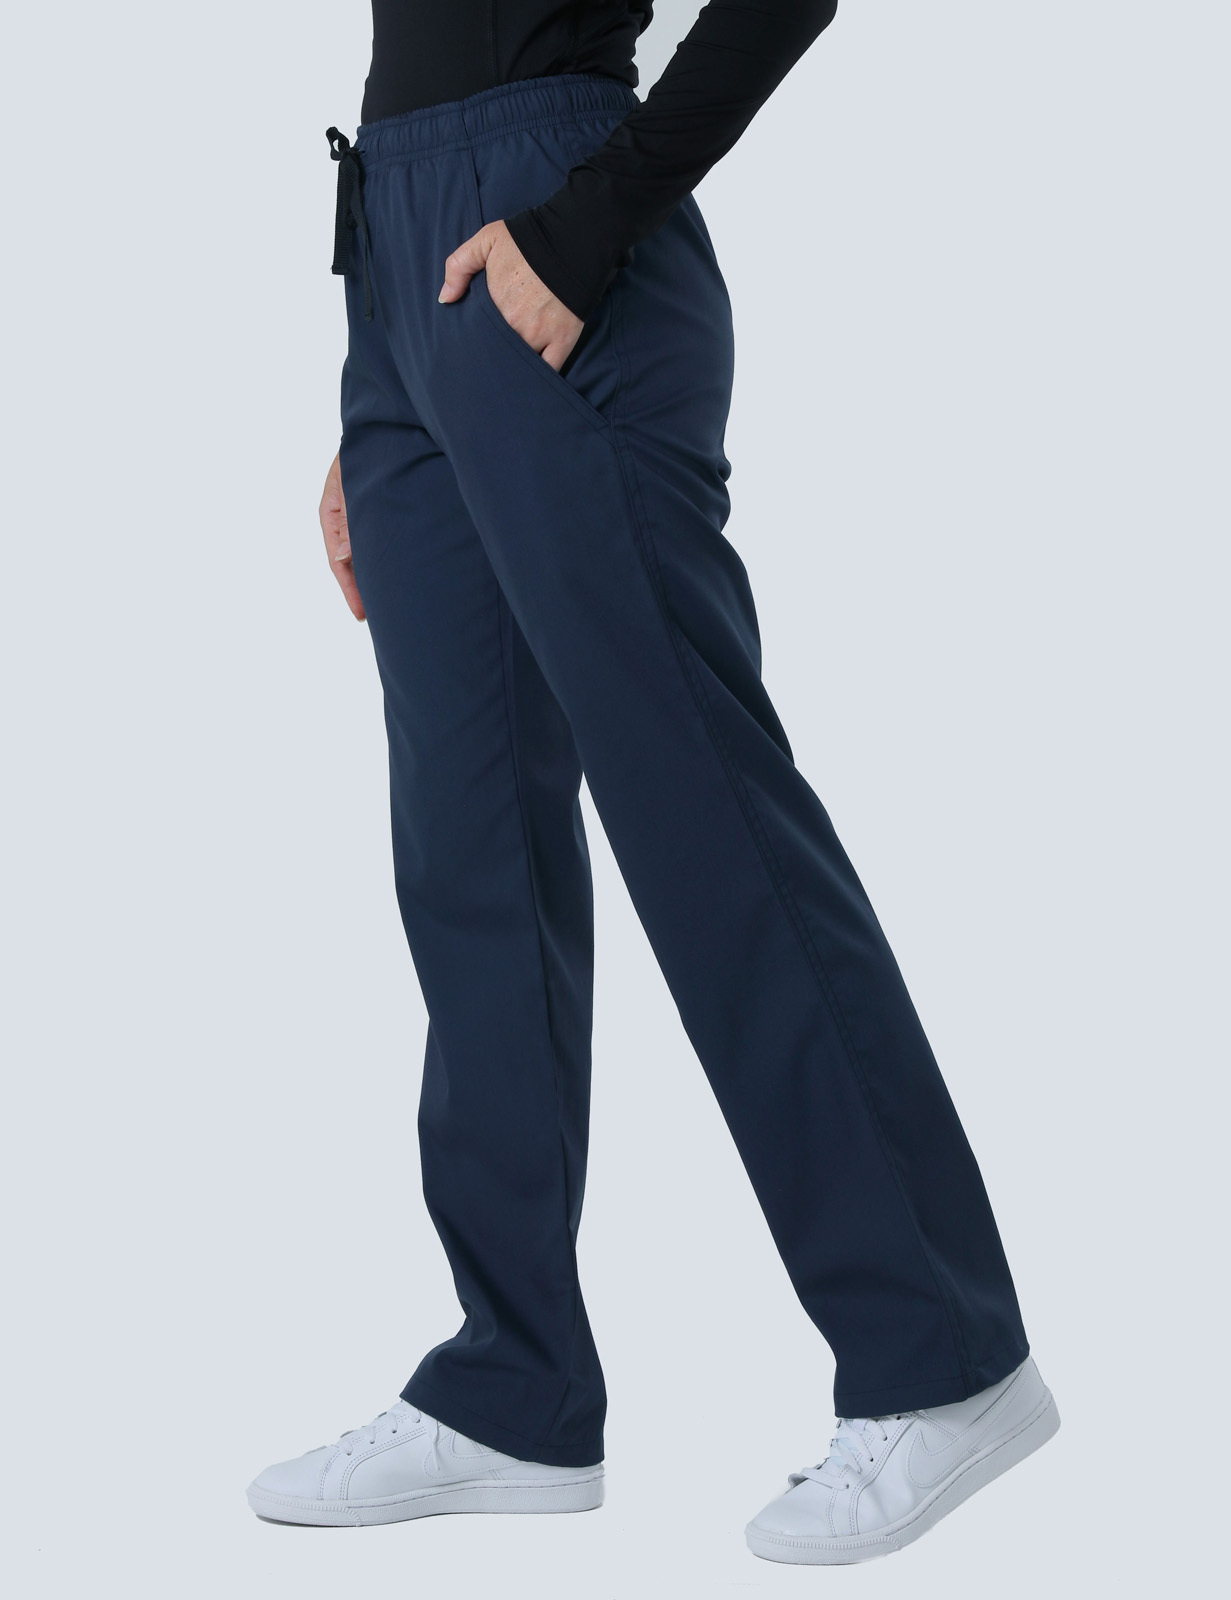 Royal Melbourne Hospital Dermatology Department Uniform Set Bndle (4 Pocket Top and Regular Pants in Navy + Logos)